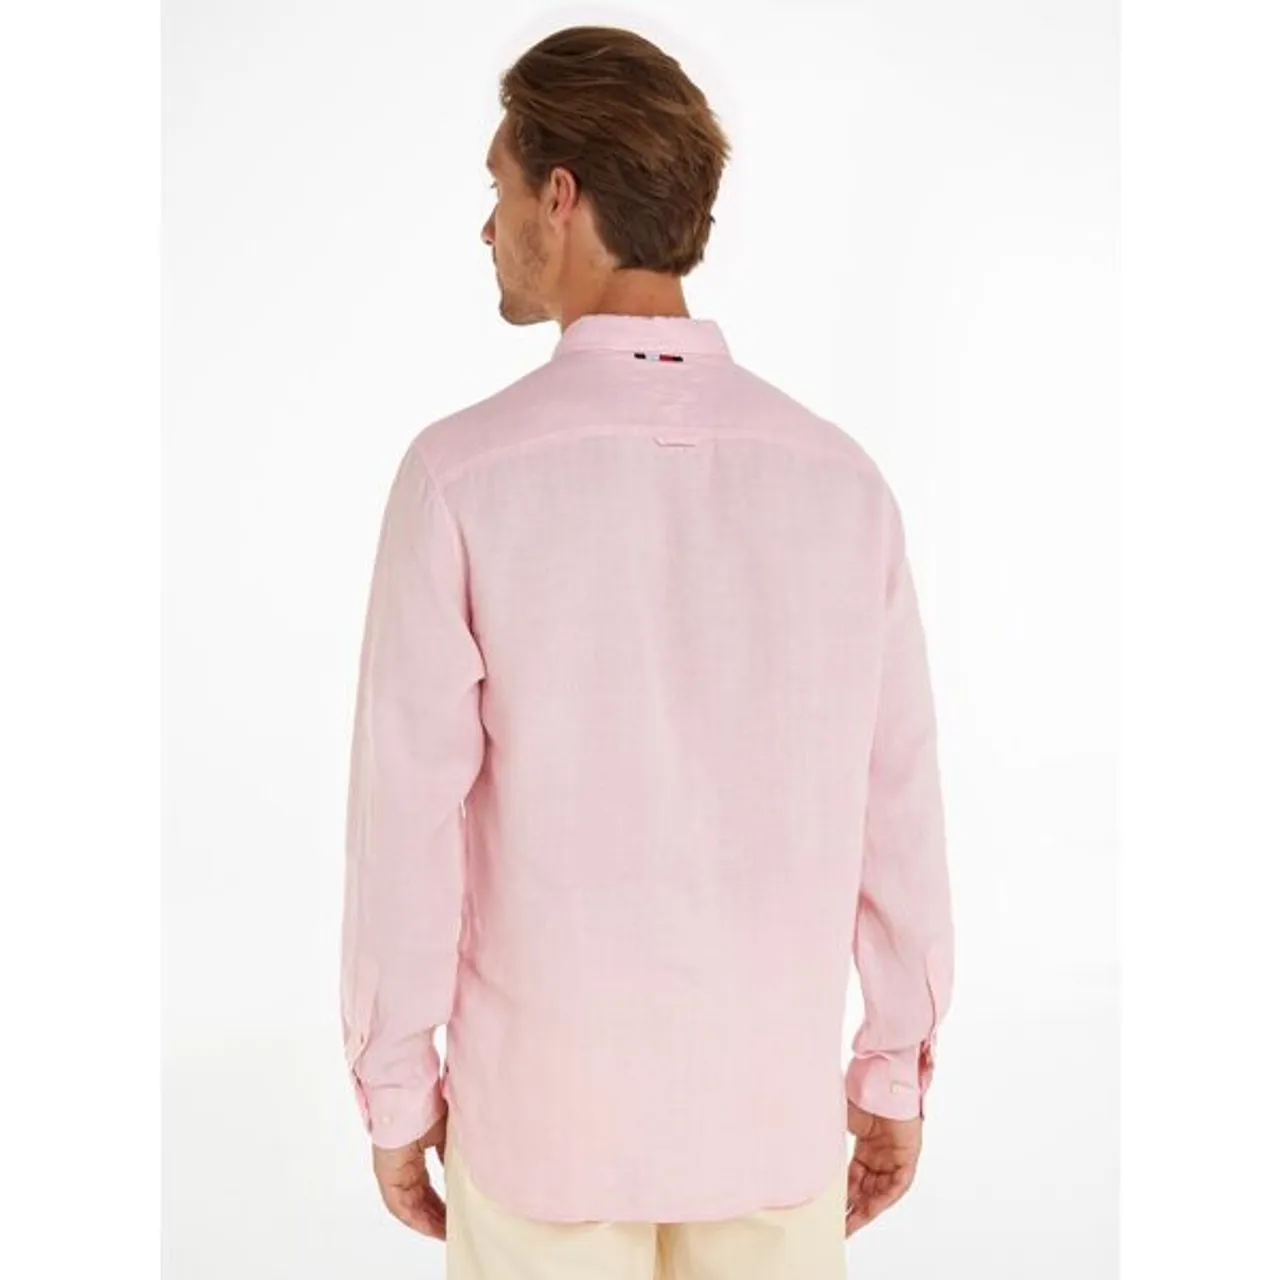 Leinenhemd TOMMY HILFIGER "PIGMENT DYED LI SOLID RF SHIRT" Gr. M, N-Gr, pink (pink crystal) Herren Hemden Langarm